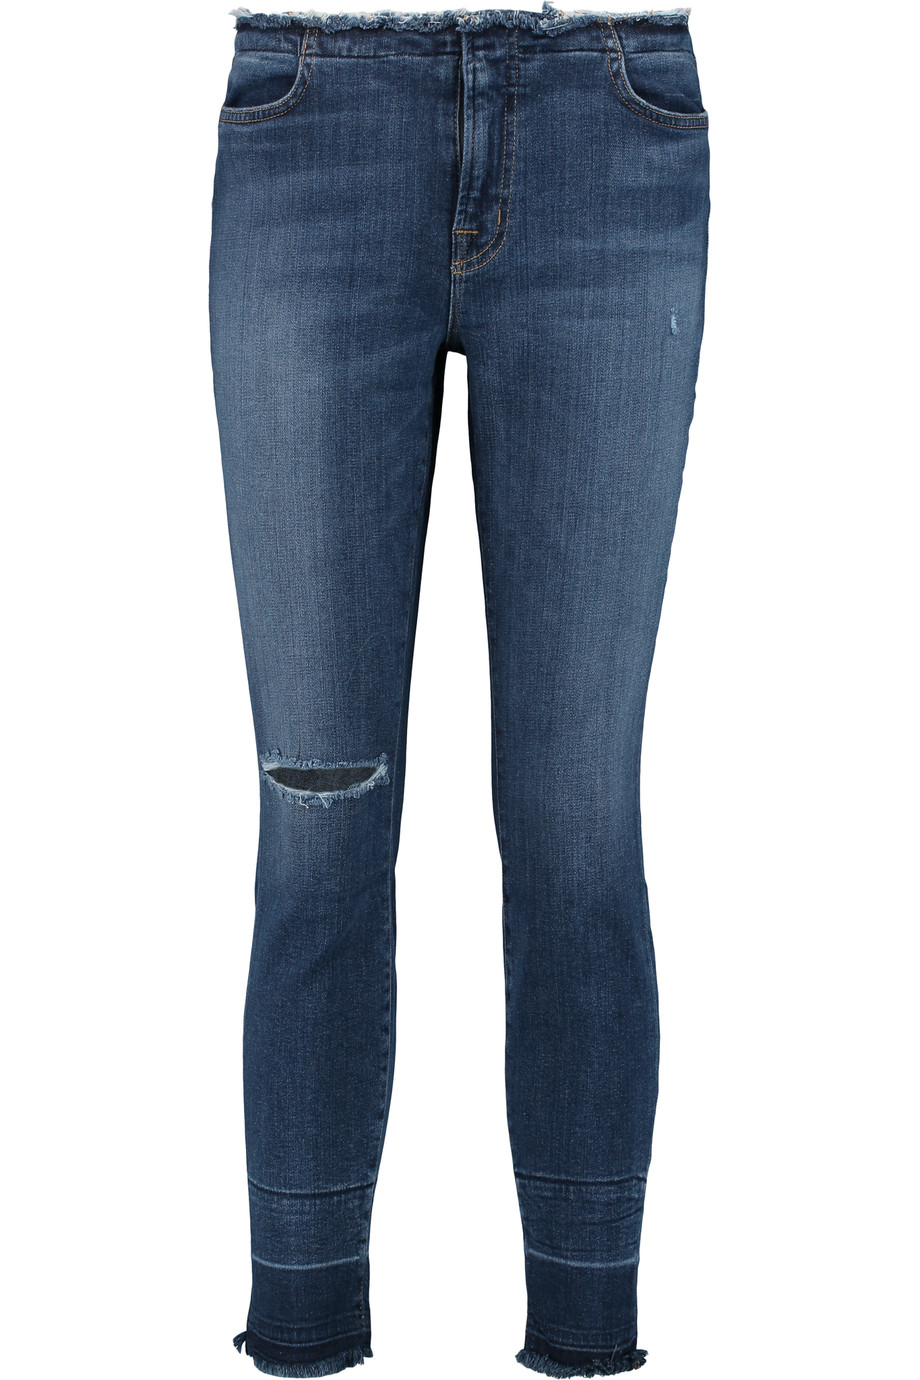 J Brand Capri Mid-rise Skinny Jeans | ModeSens